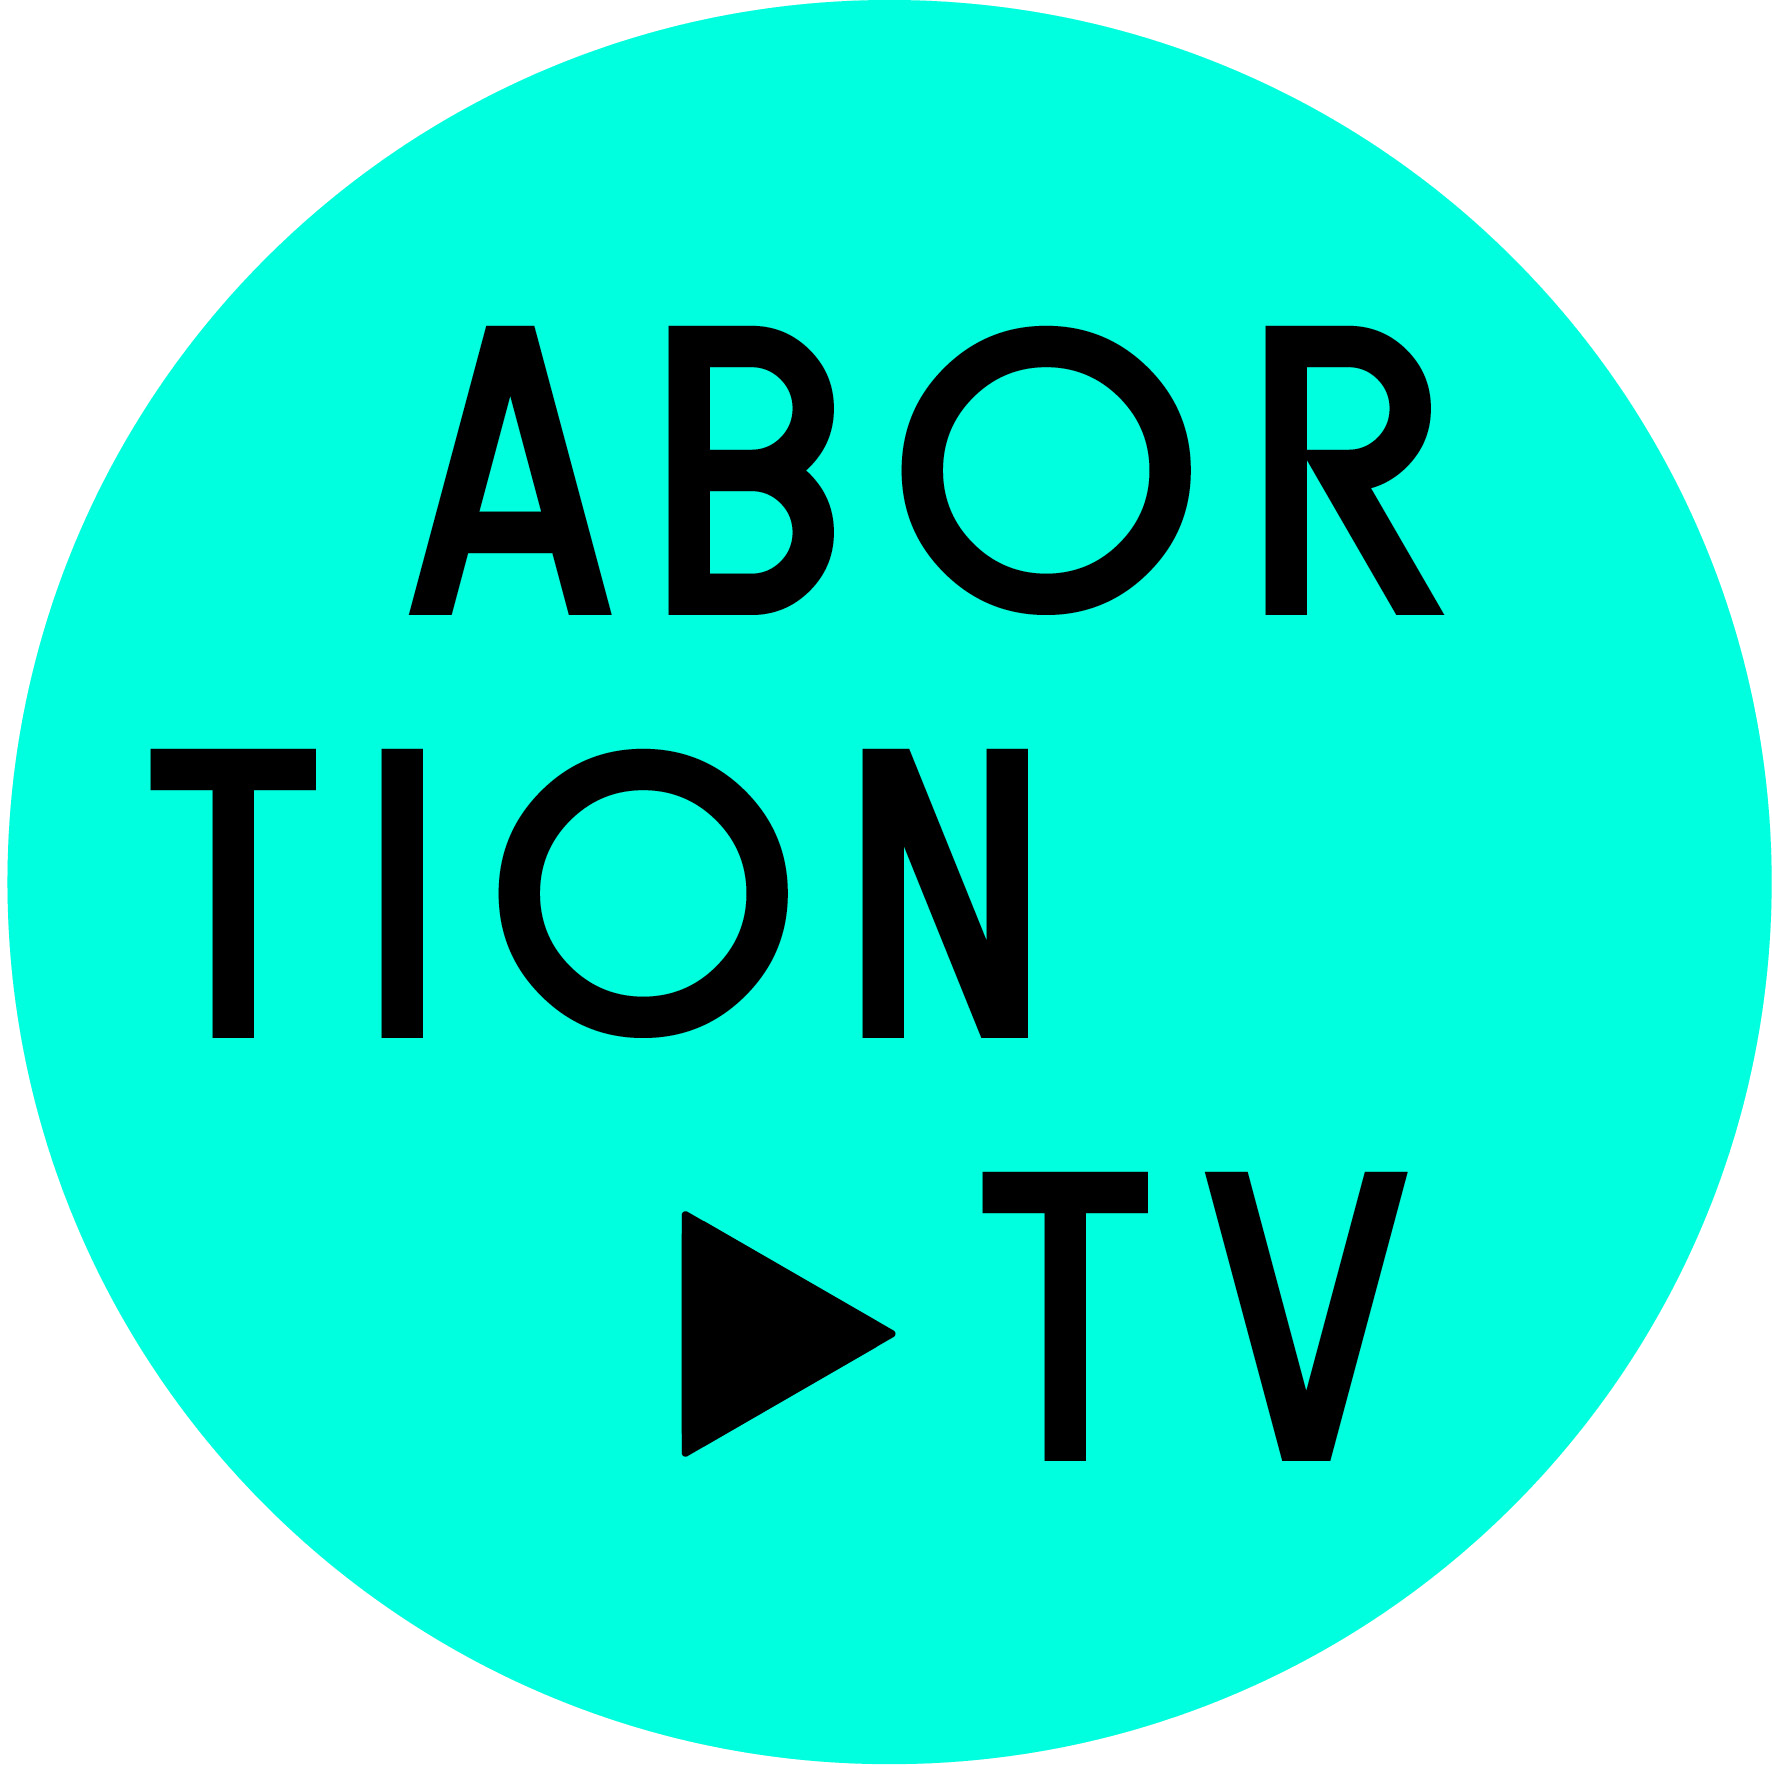 abortion.tv links